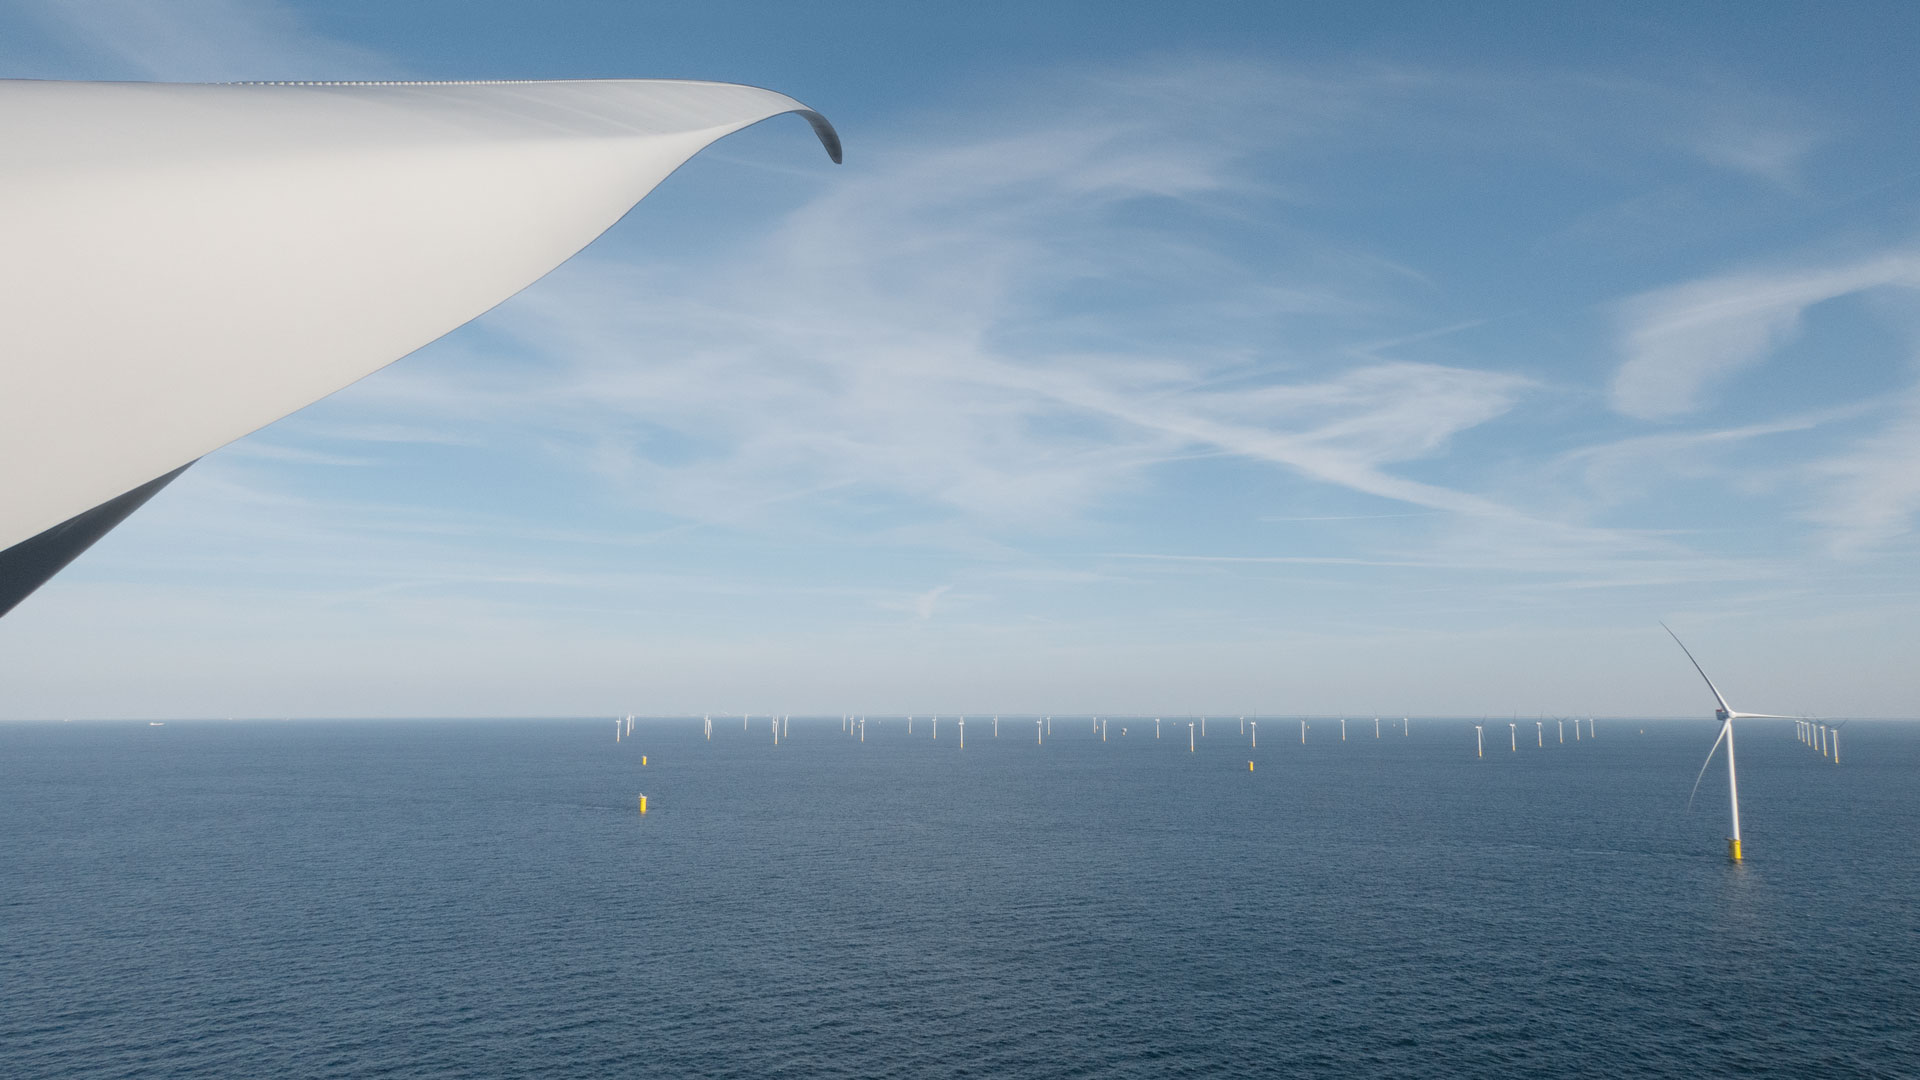 Hollandse Kust Zuid offshore wind farm